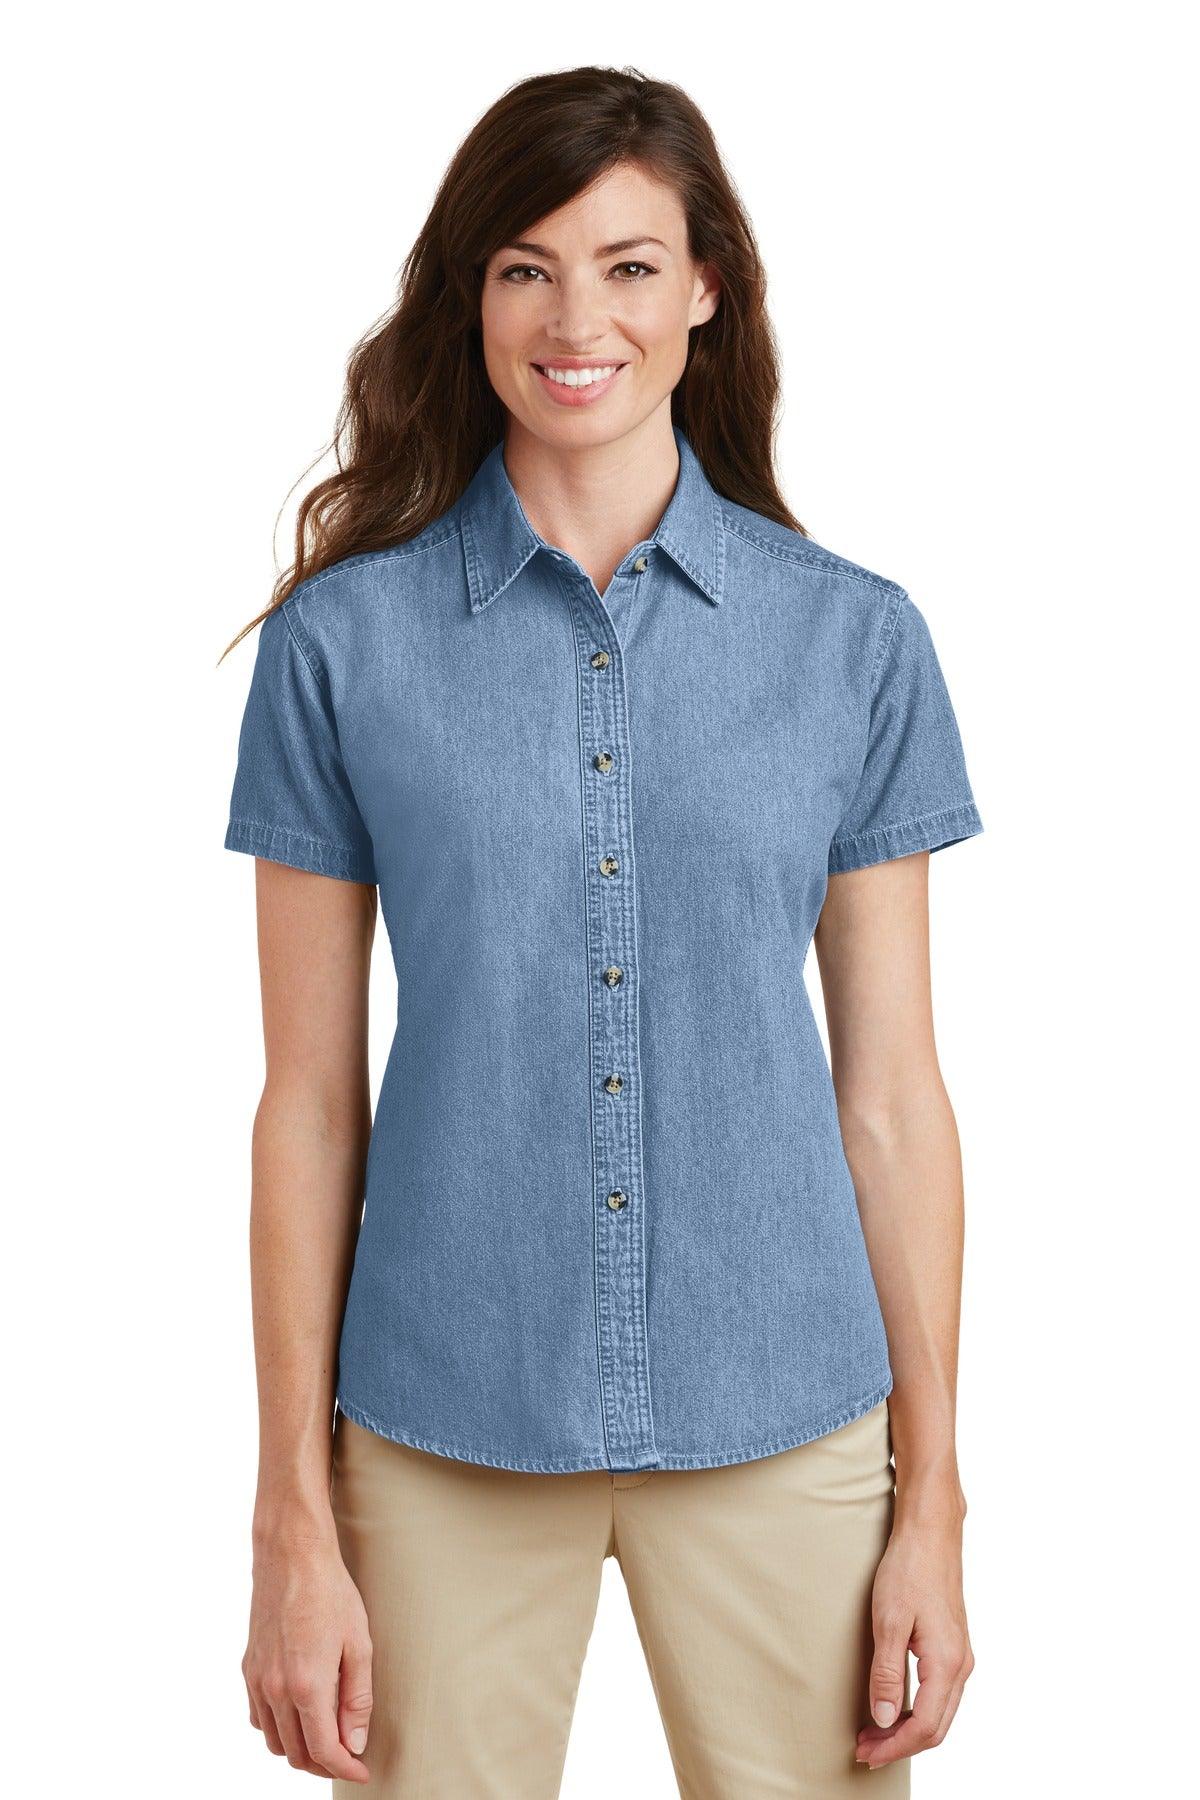 Port & Company - Ladies Short Sleeve Value Denim Shirt. LSP11 - Dresses Max